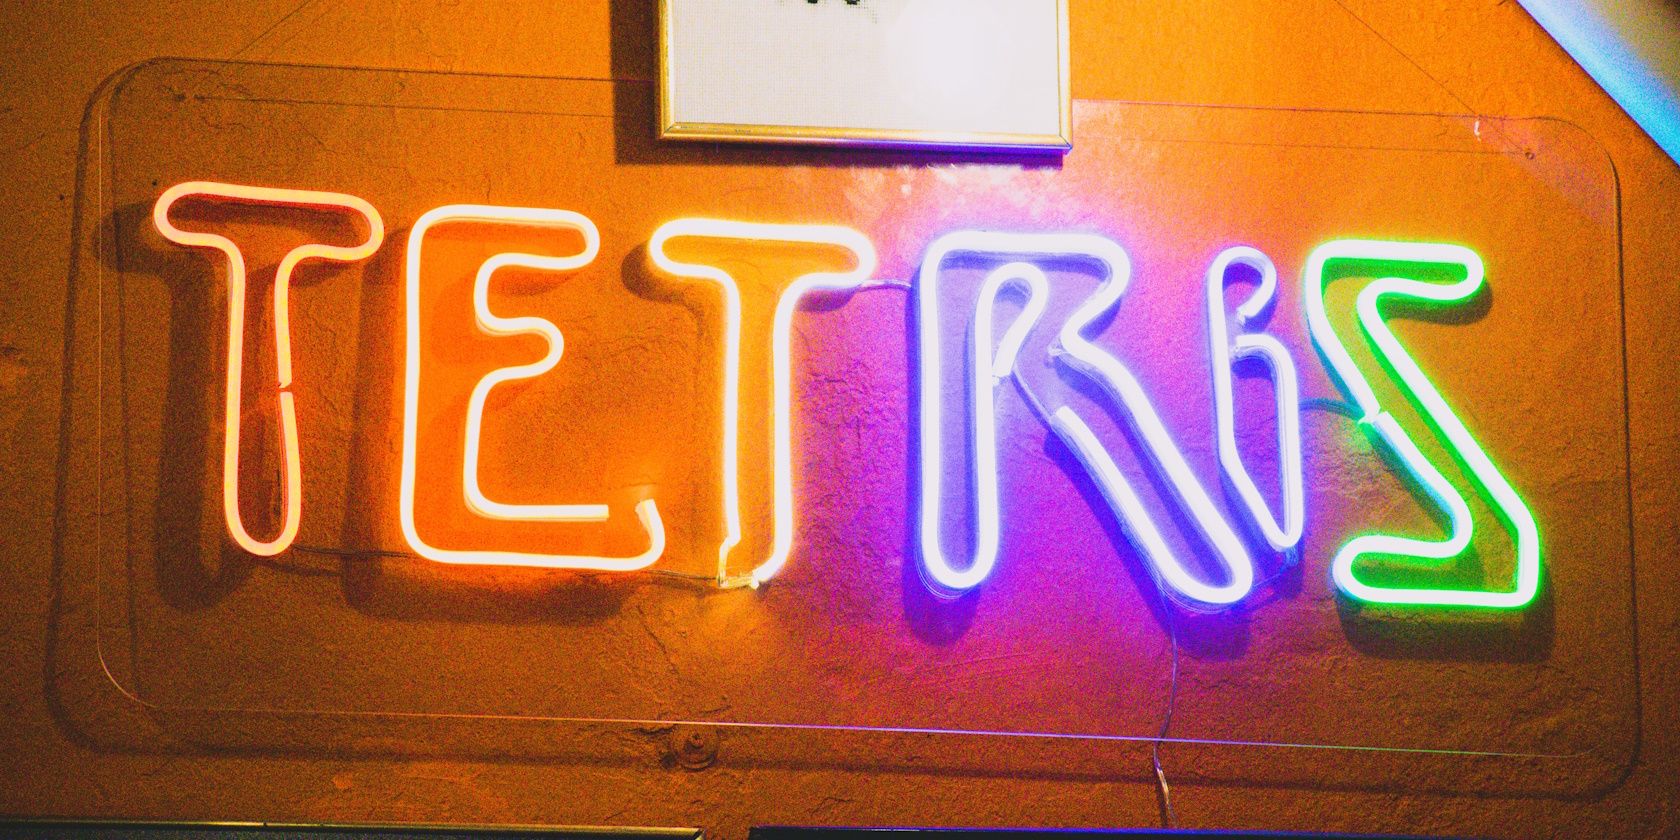 A neon lit Tetris sign